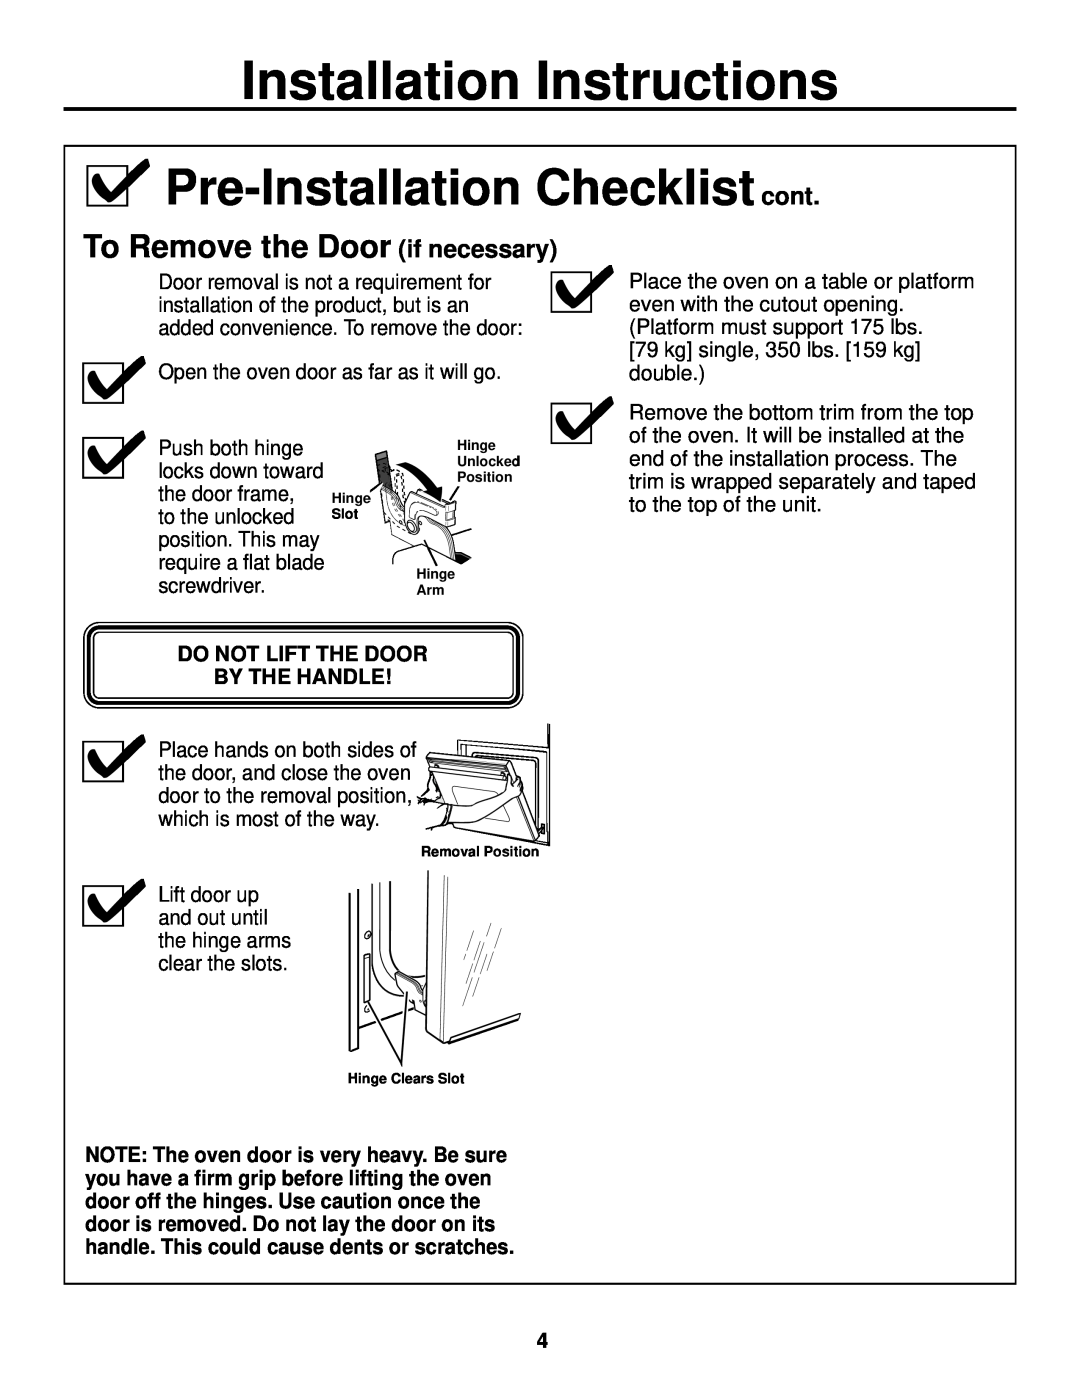 GE ZET2, ZET1 Pre-Installation Checklist cont, To Remove the Door if necessary, Installation Instructions 